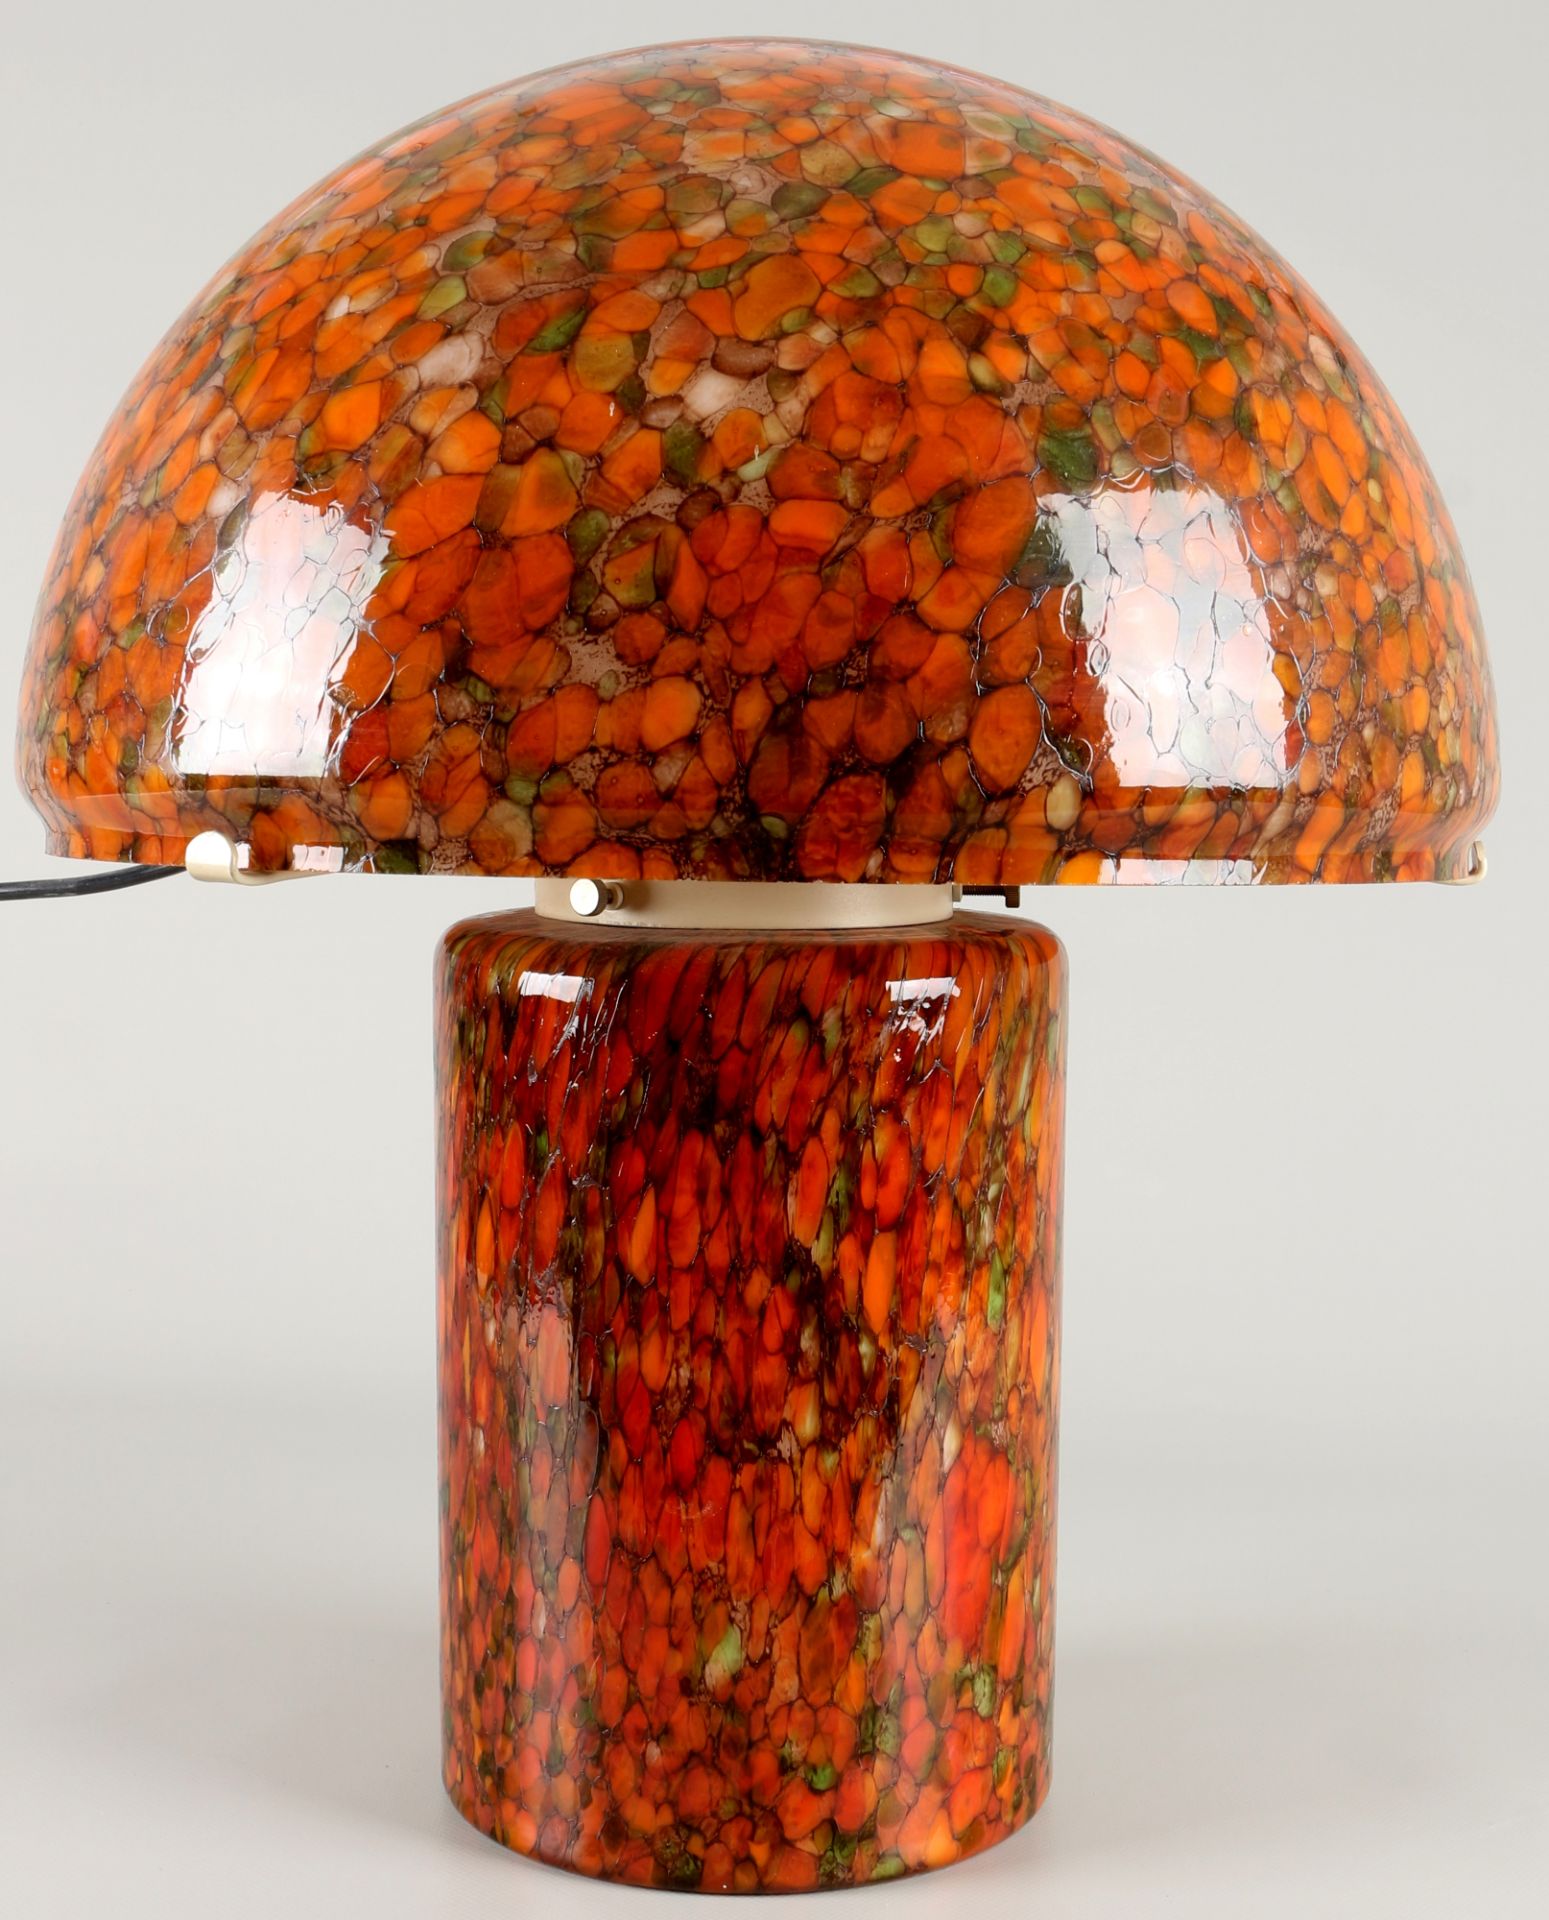 Peill & Putzler Pilz-Tischlampe 1970er Jahre, vintage mushroom table lamp 70s design, - Image 2 of 4